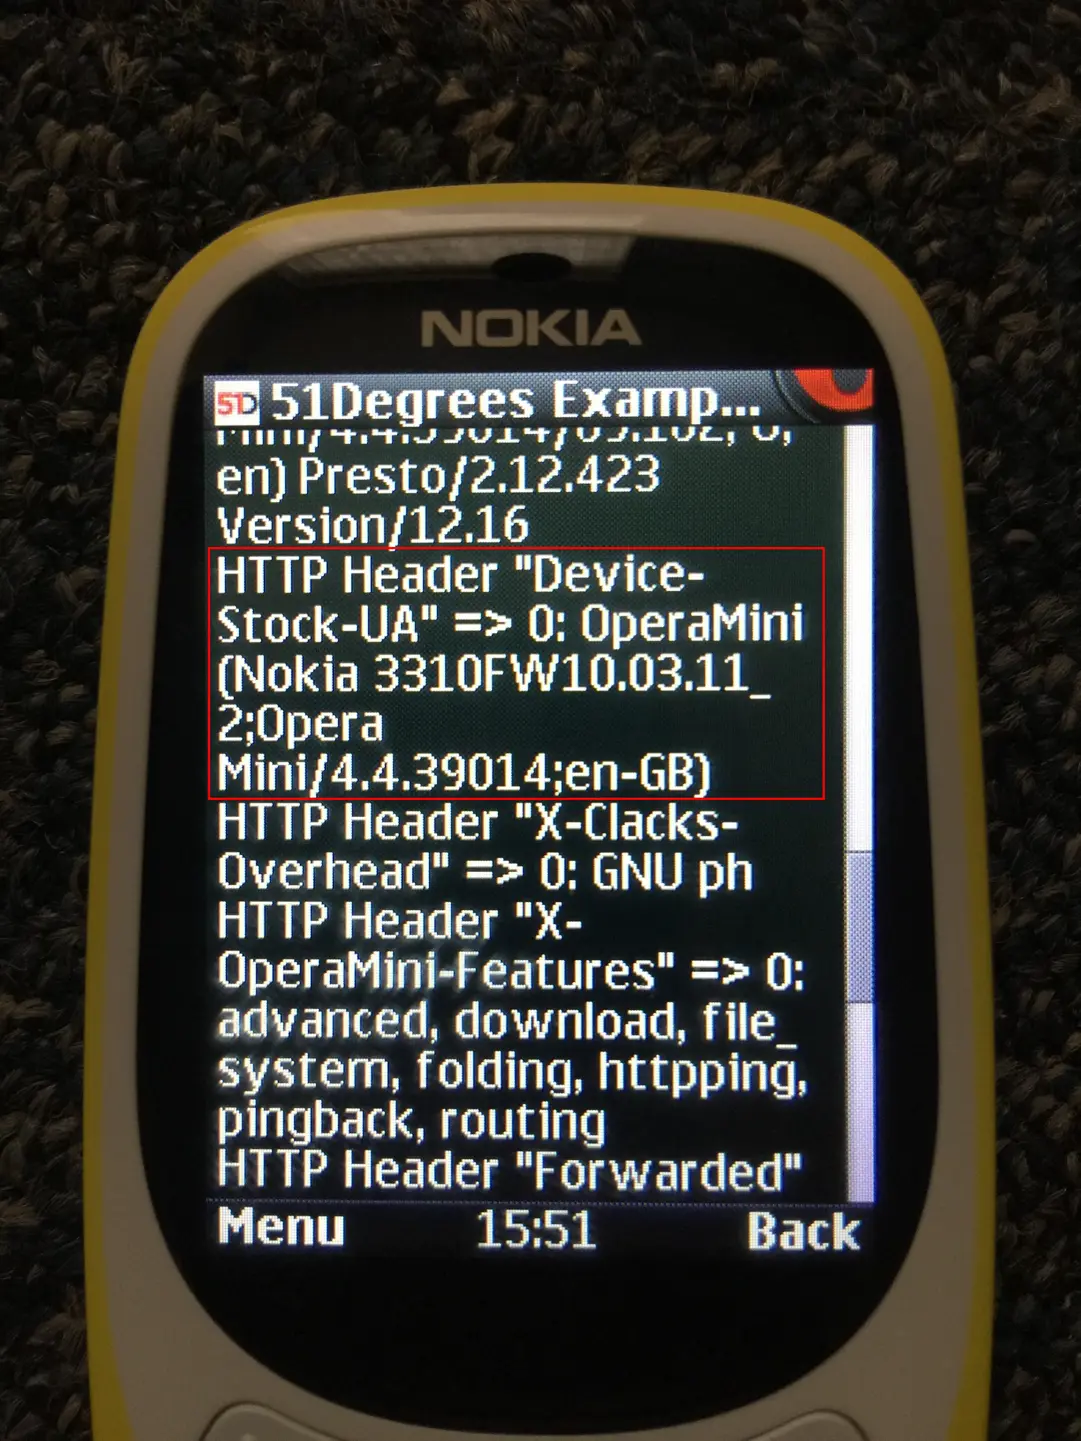 3310 online nokia emulator Nokia 3310